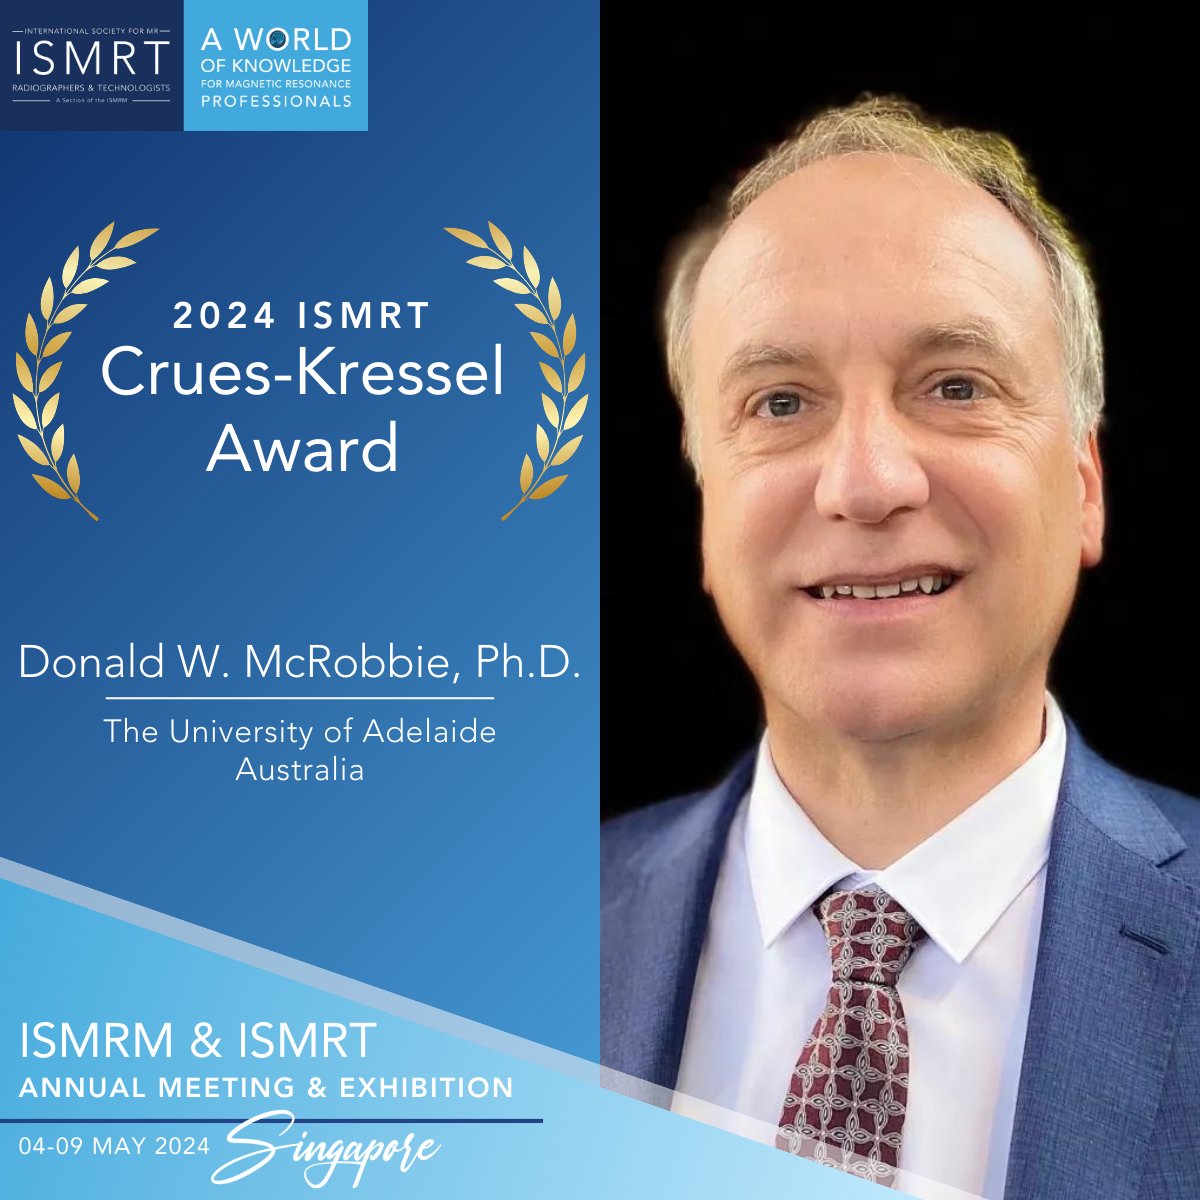 Congratulations to Donald W. McRobbie, Ph.D., winner of the 2024 ISMRT Crues-Kressel Award!

#ISMRT2024 #ISMRM2024 #ISMRT #ISMRM #MRI #MR #MagneticResonance #Singapore